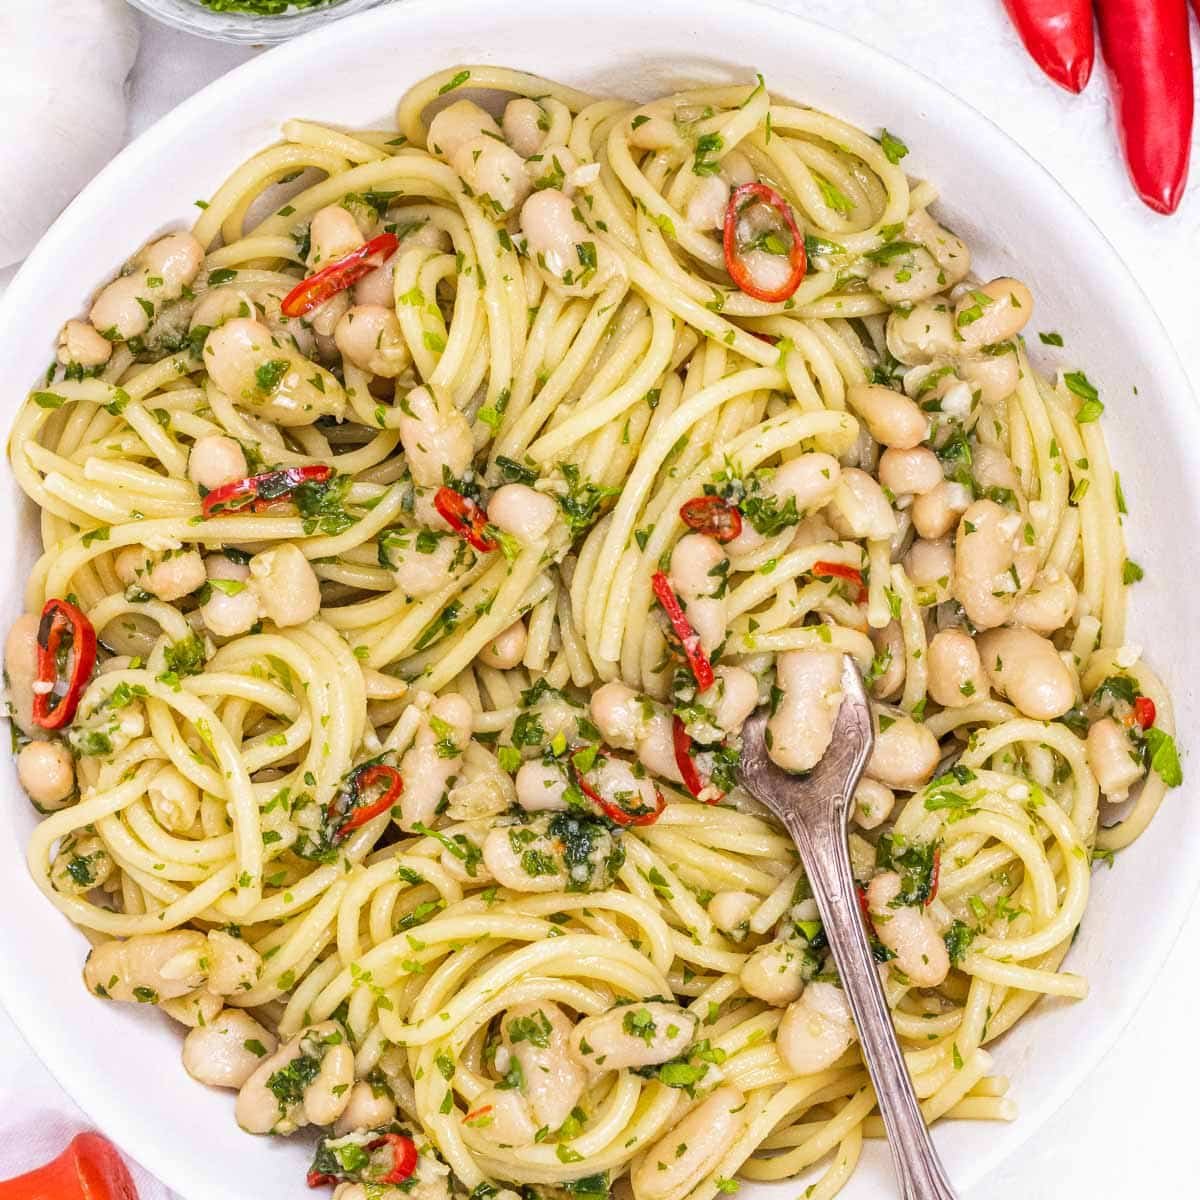 aglio olio with chili and white beans